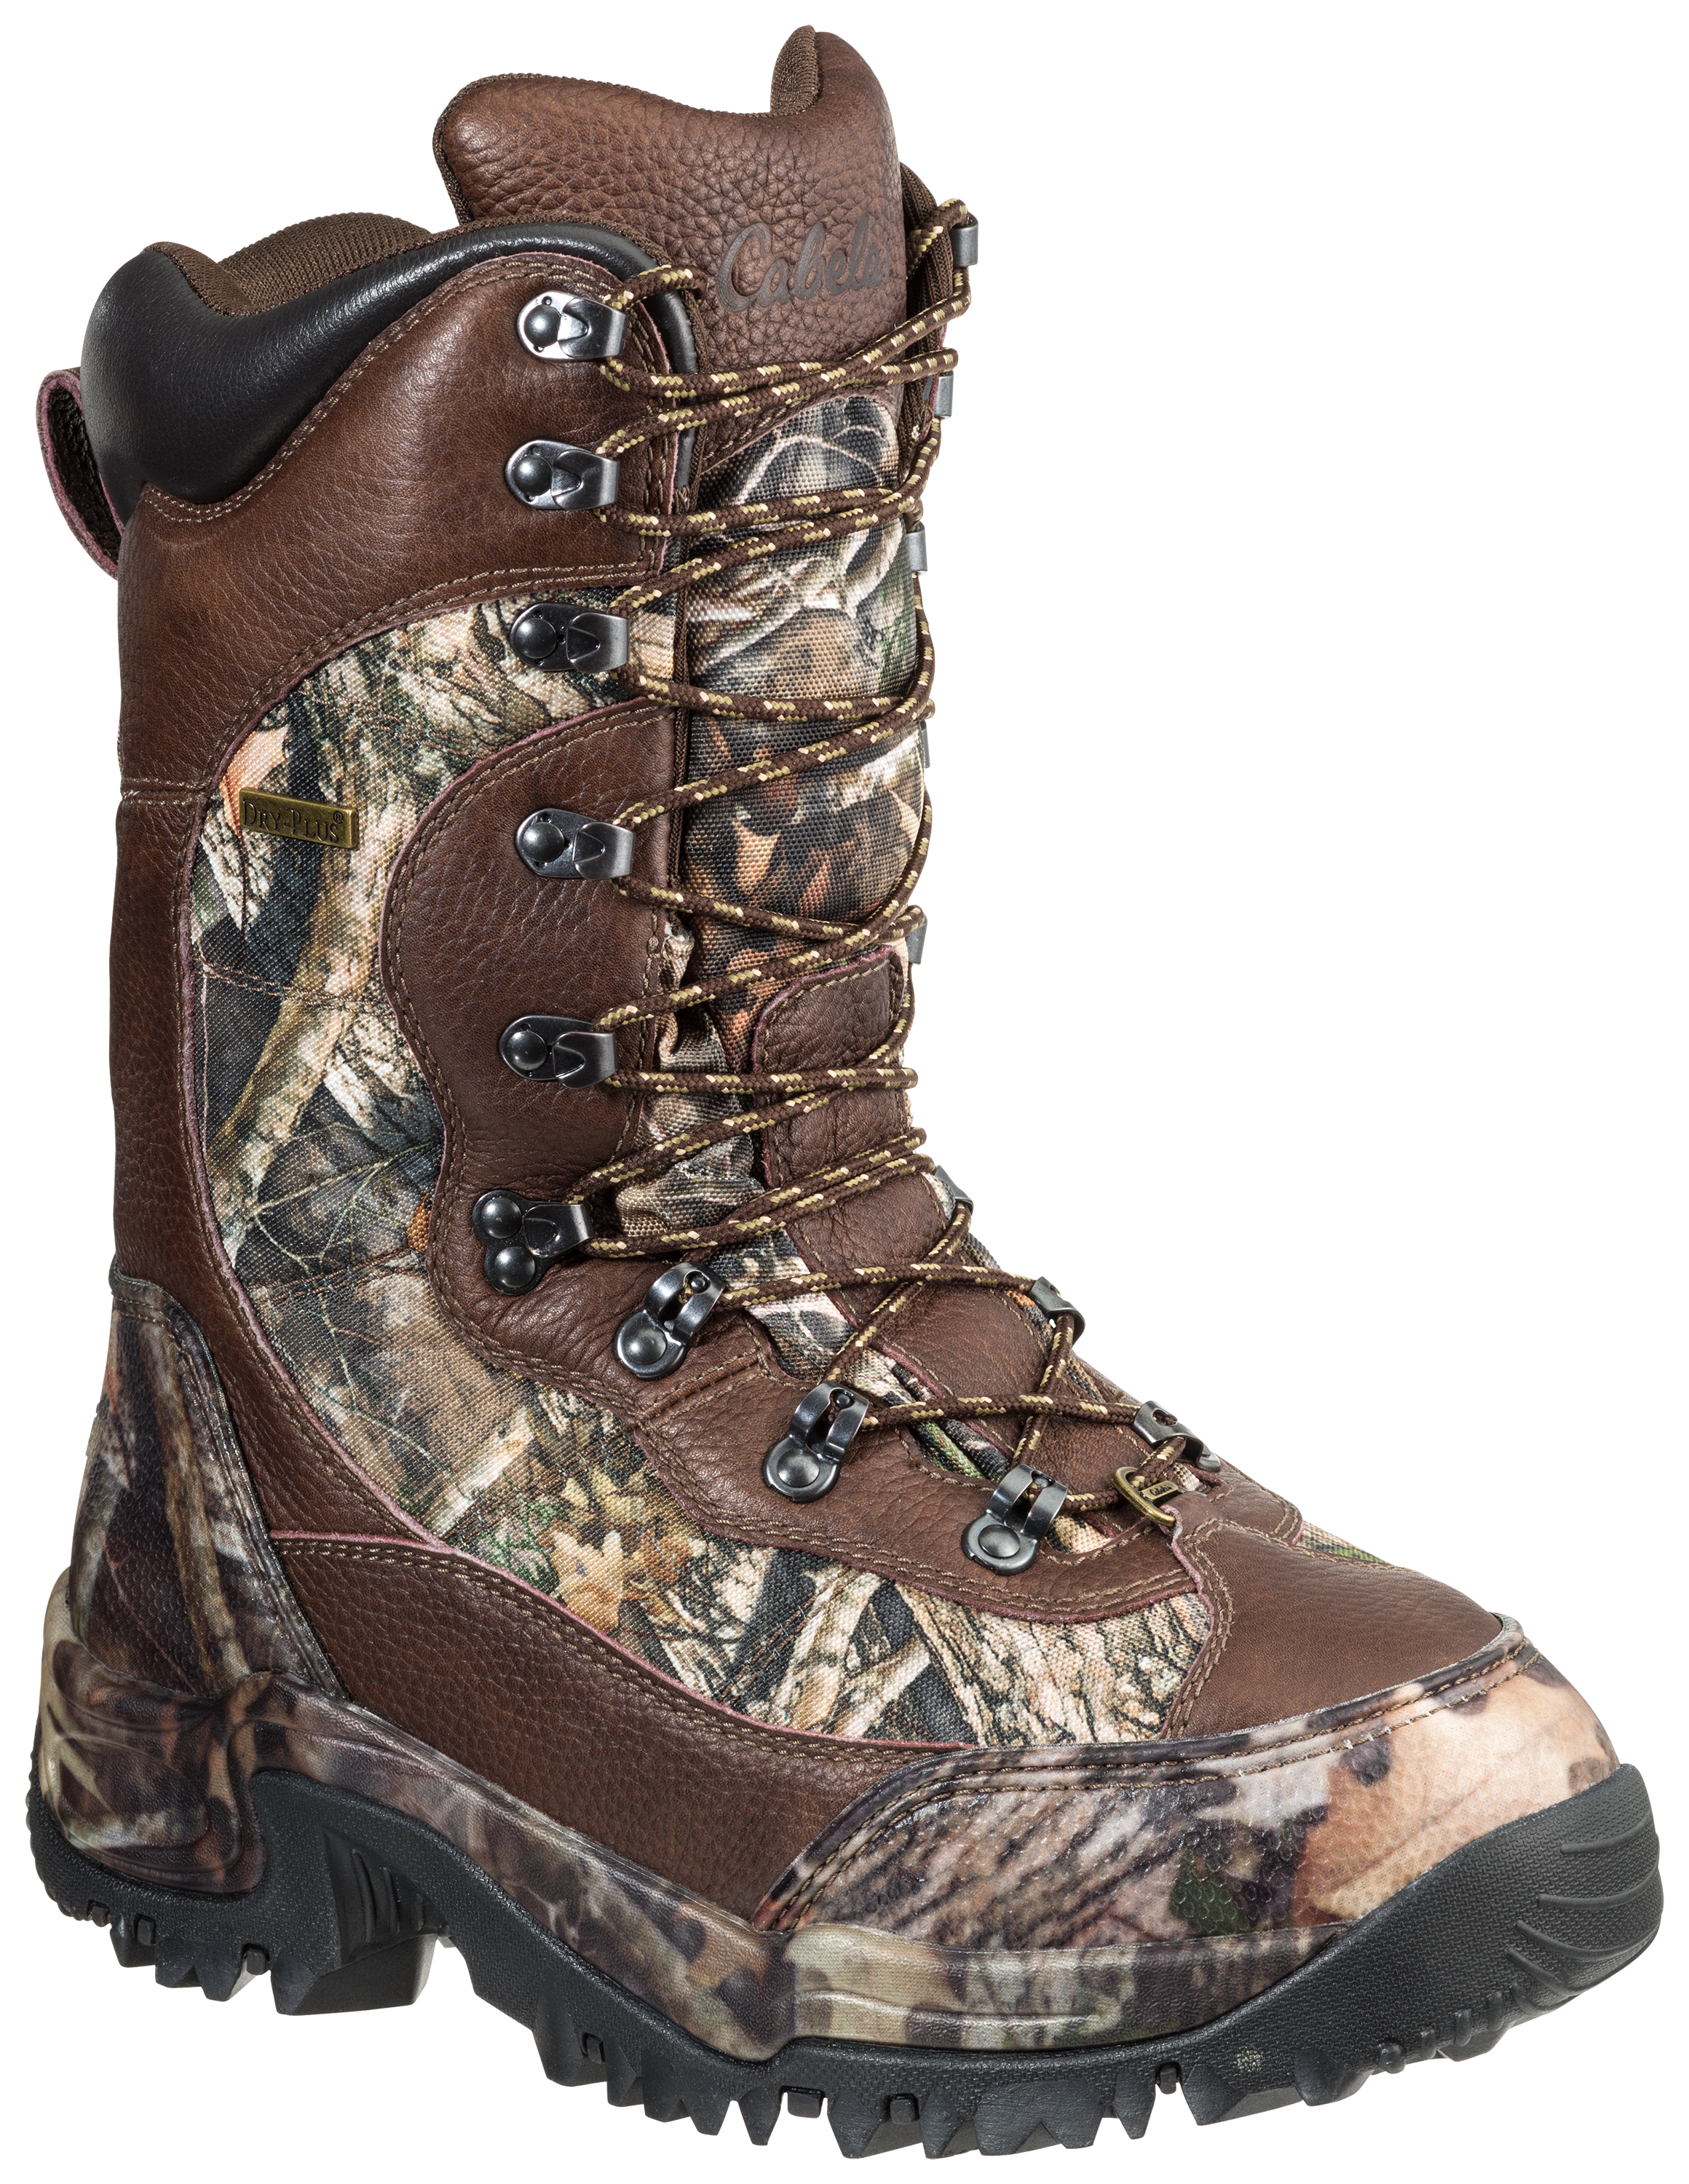 Cabela's Inferno Insulated Waterproof Hunting Boots for Men - Brown/TrueTimber Kanati - 14M